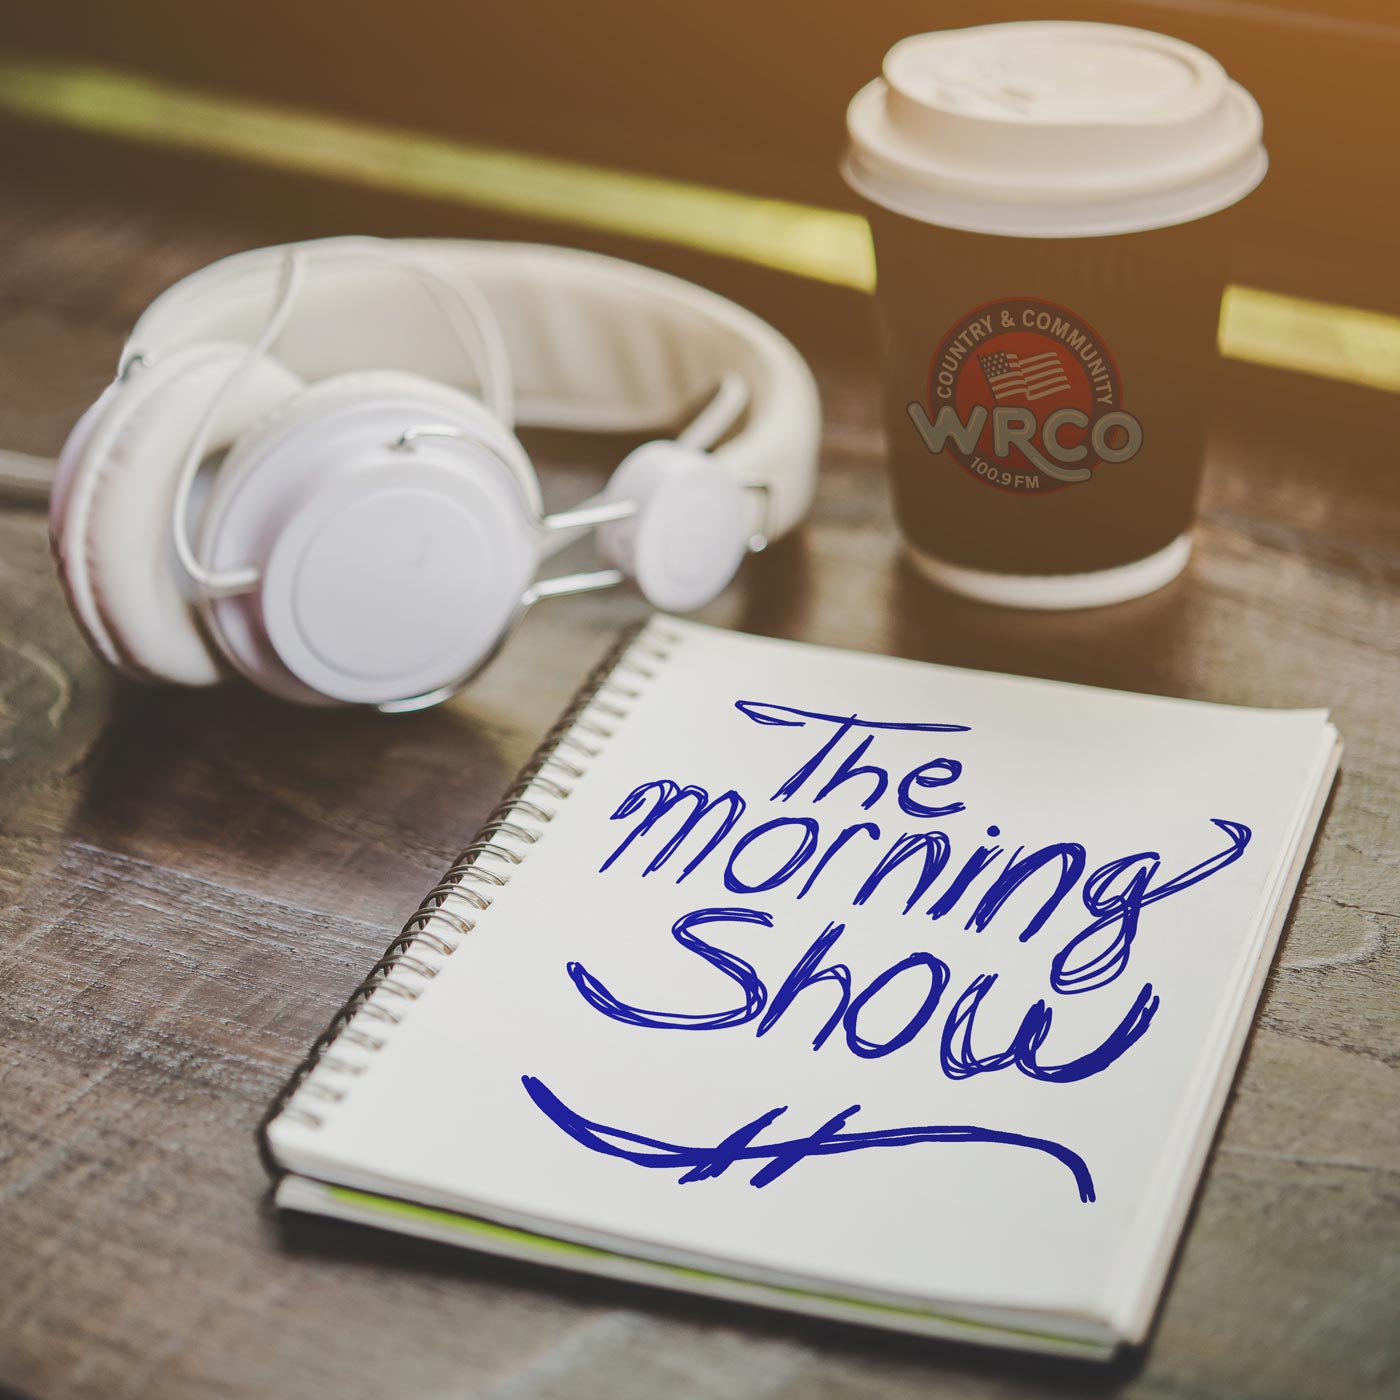 WRCO Morning Show